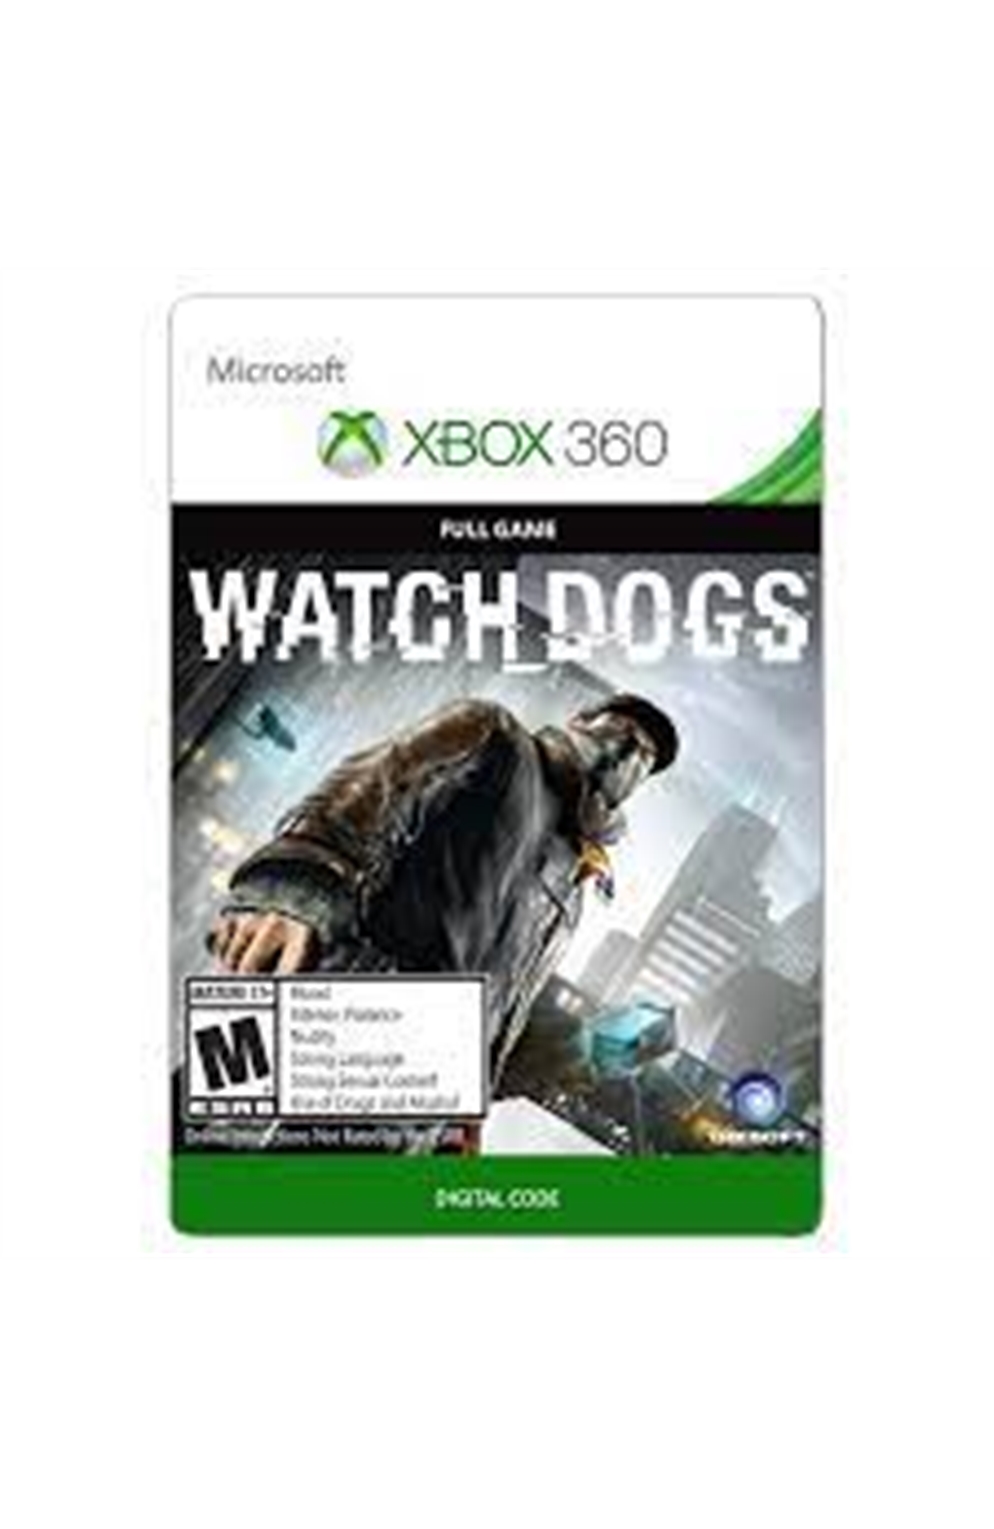 Xbox 360 Xb360 Watch Dogs-Walmart Edition